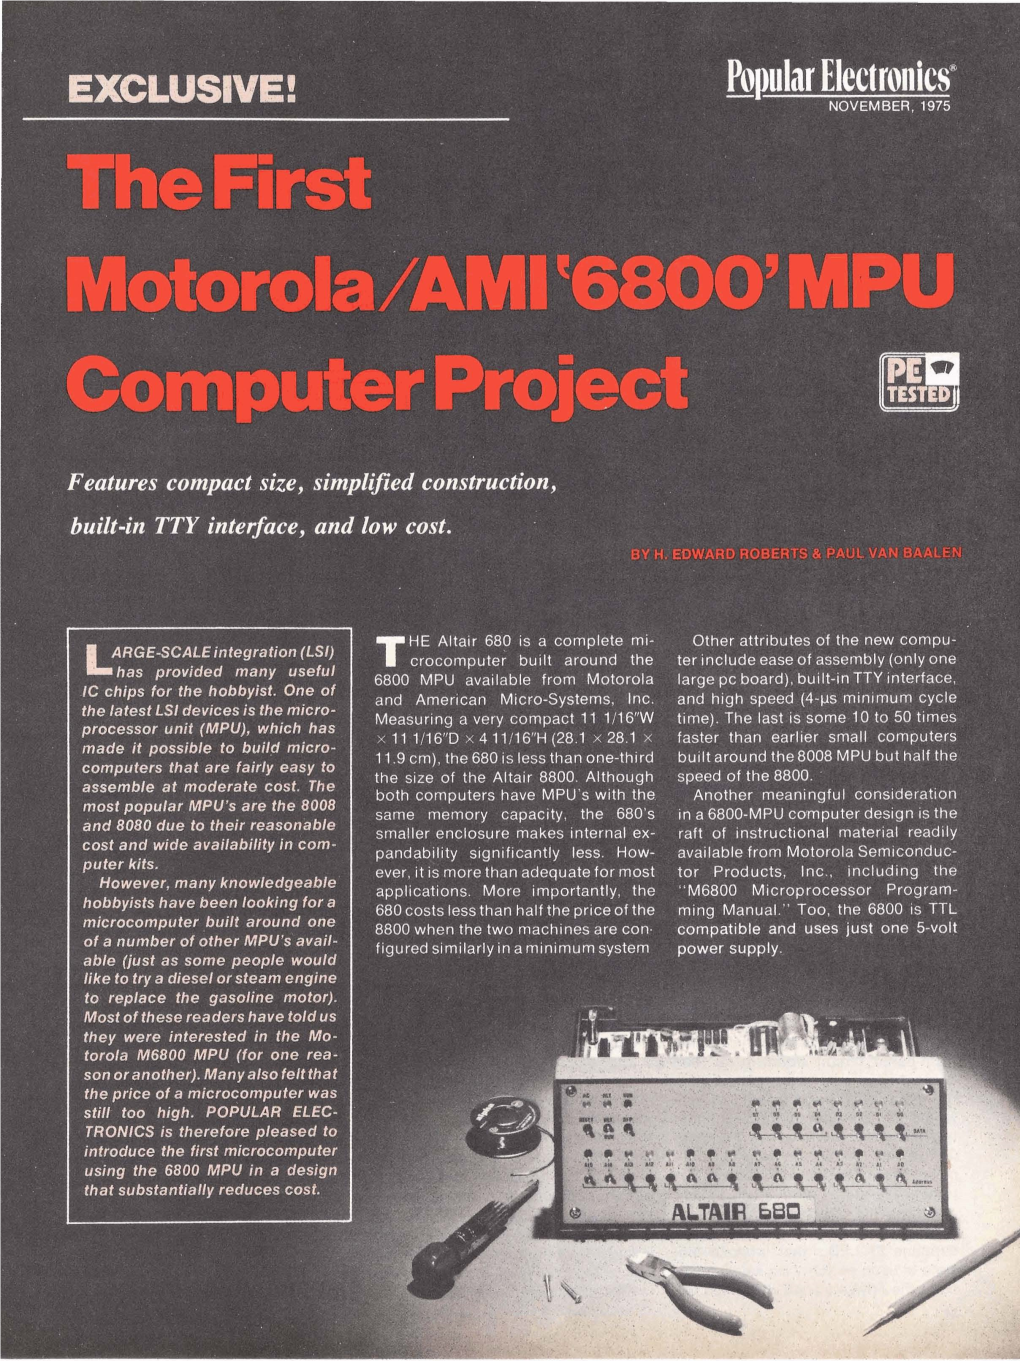 The First Motorola/AMI "6800" MPU Computer Project, Popular